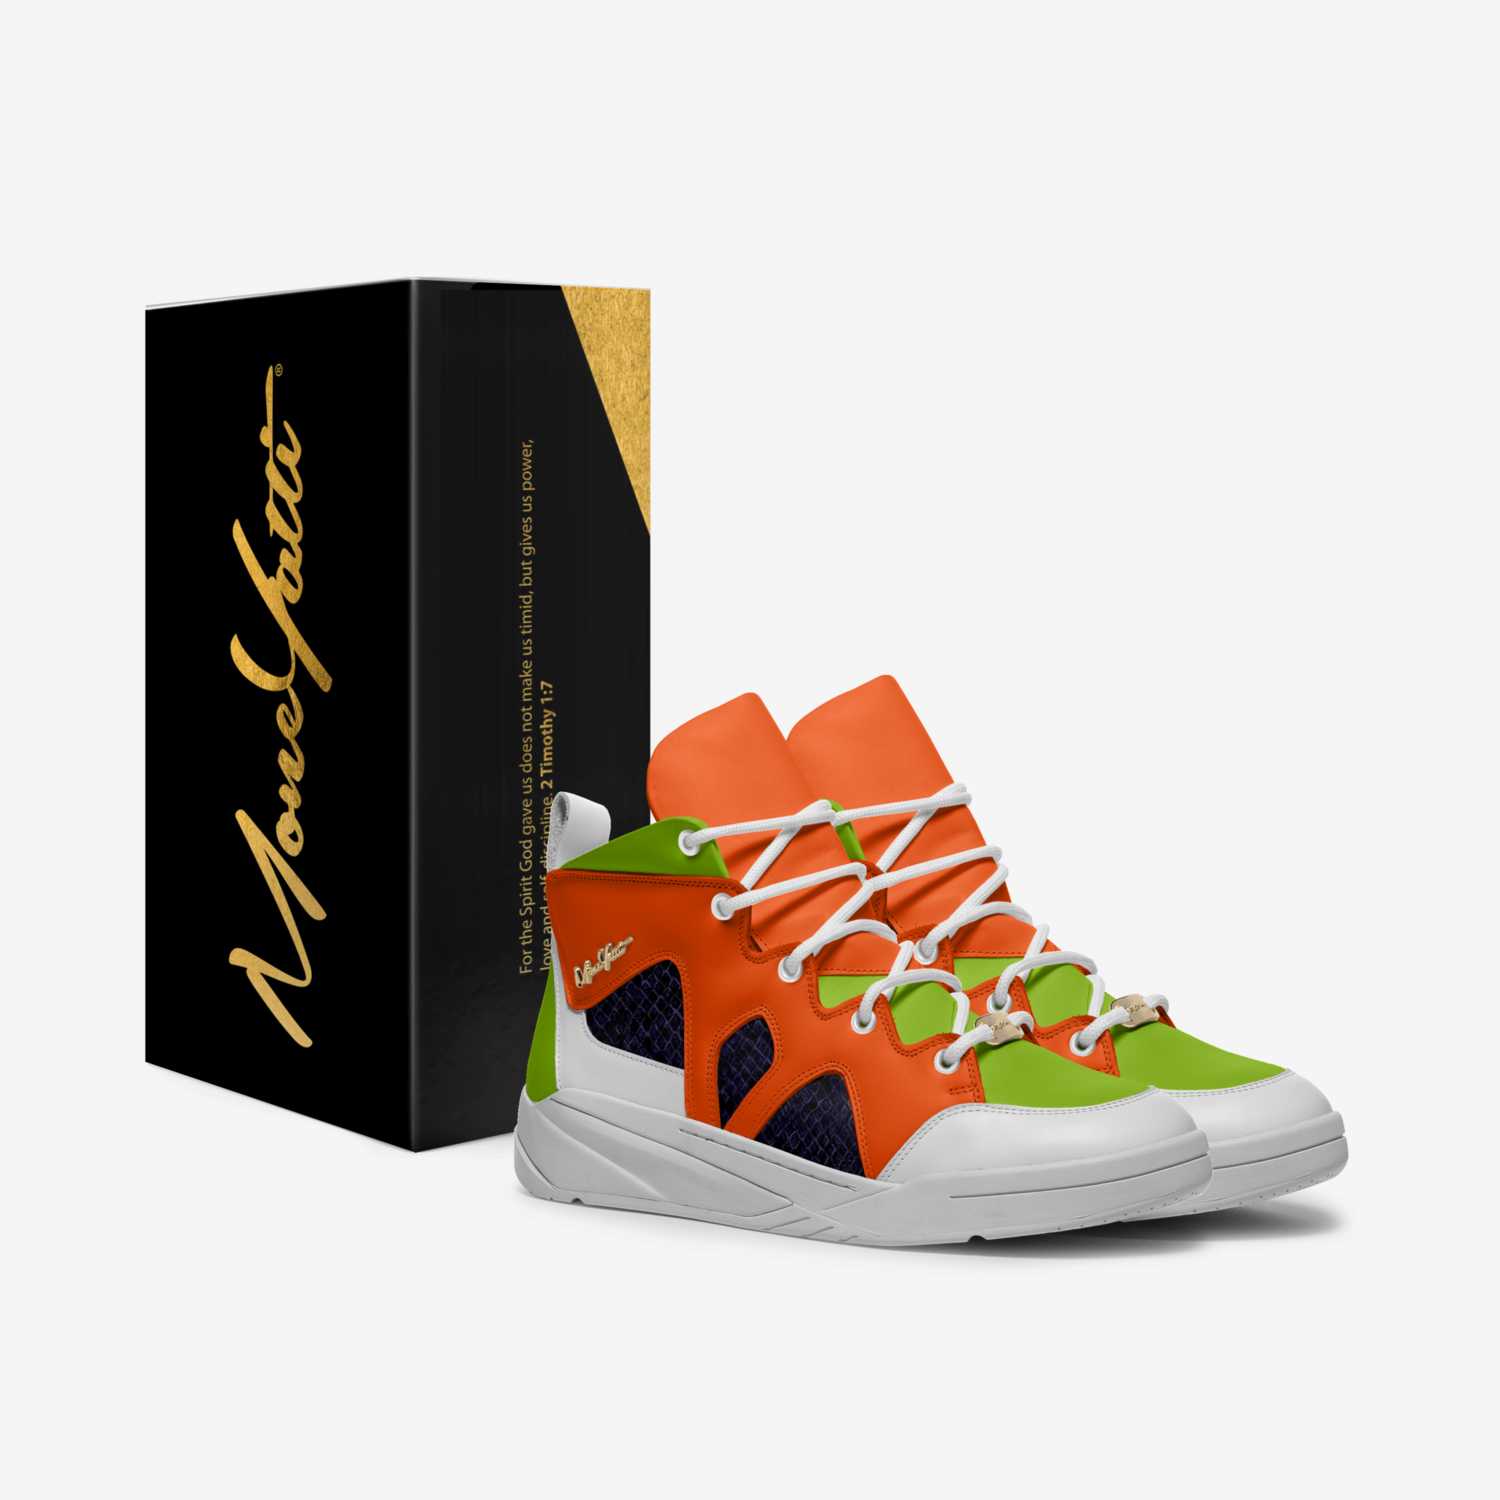 MONEYATTI TAKEOFF 003 custom made in Italy shoes by Moneyatti Brand | Box view